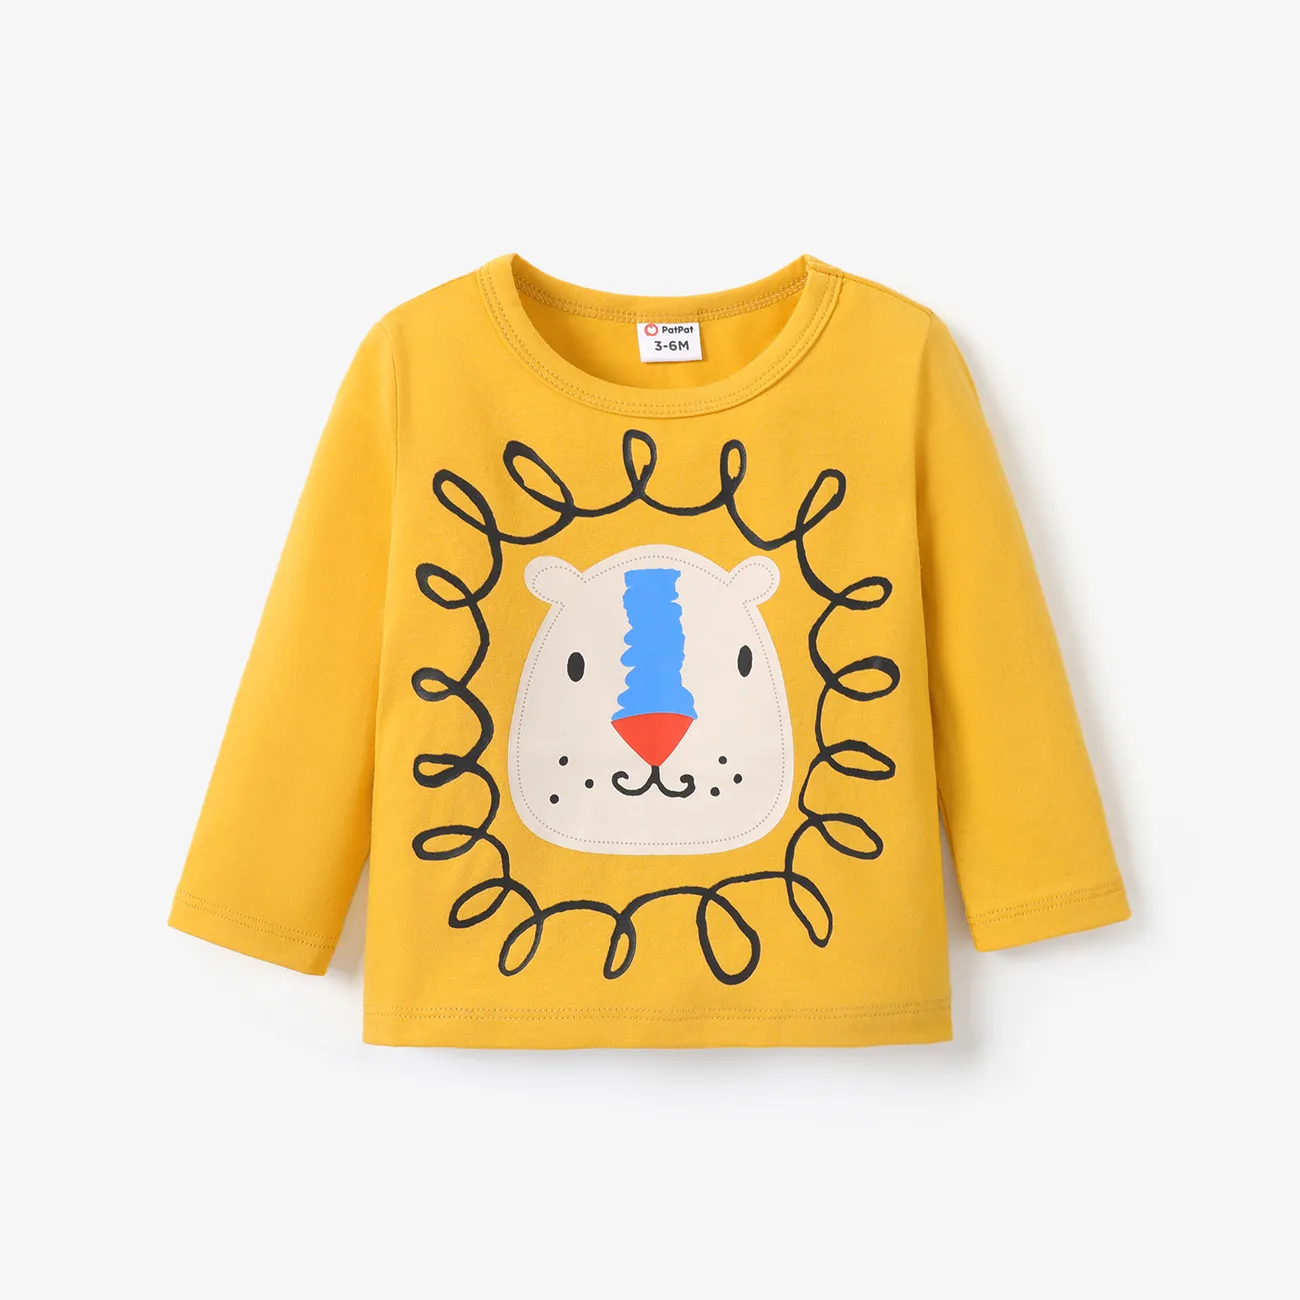 Baby Boy Elephant or Lion Pattern T-shirt Yellow big image 1